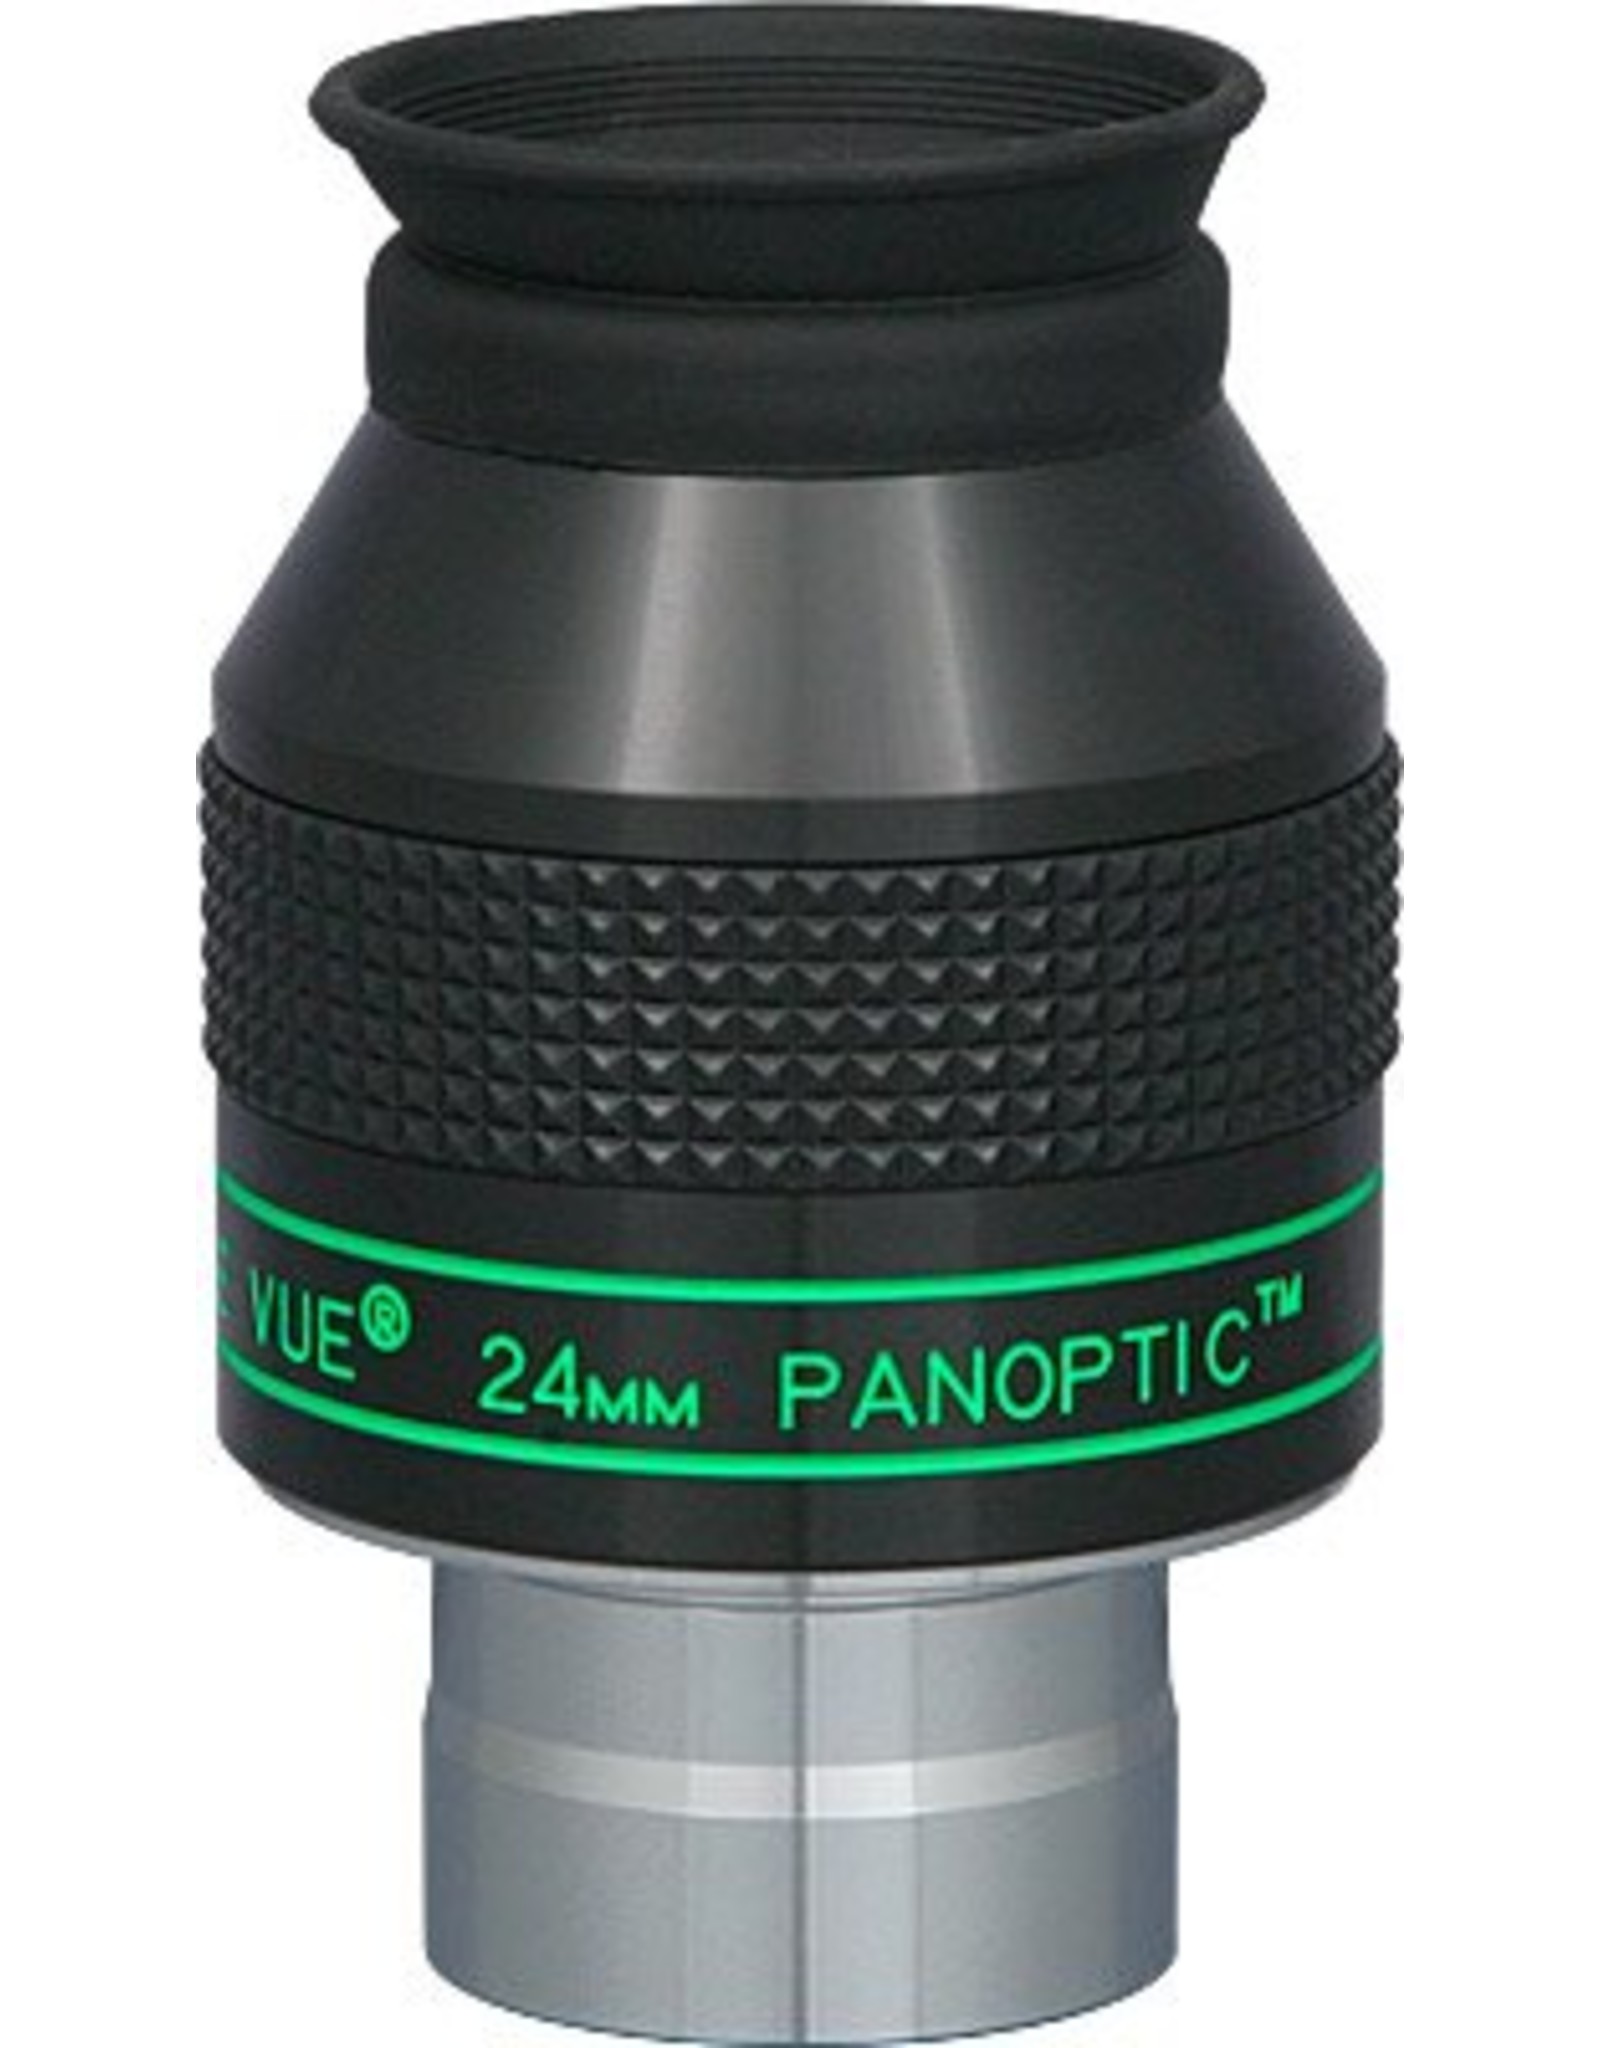 Tele Vue 24mm Panoptic Eyepiece - 1.25